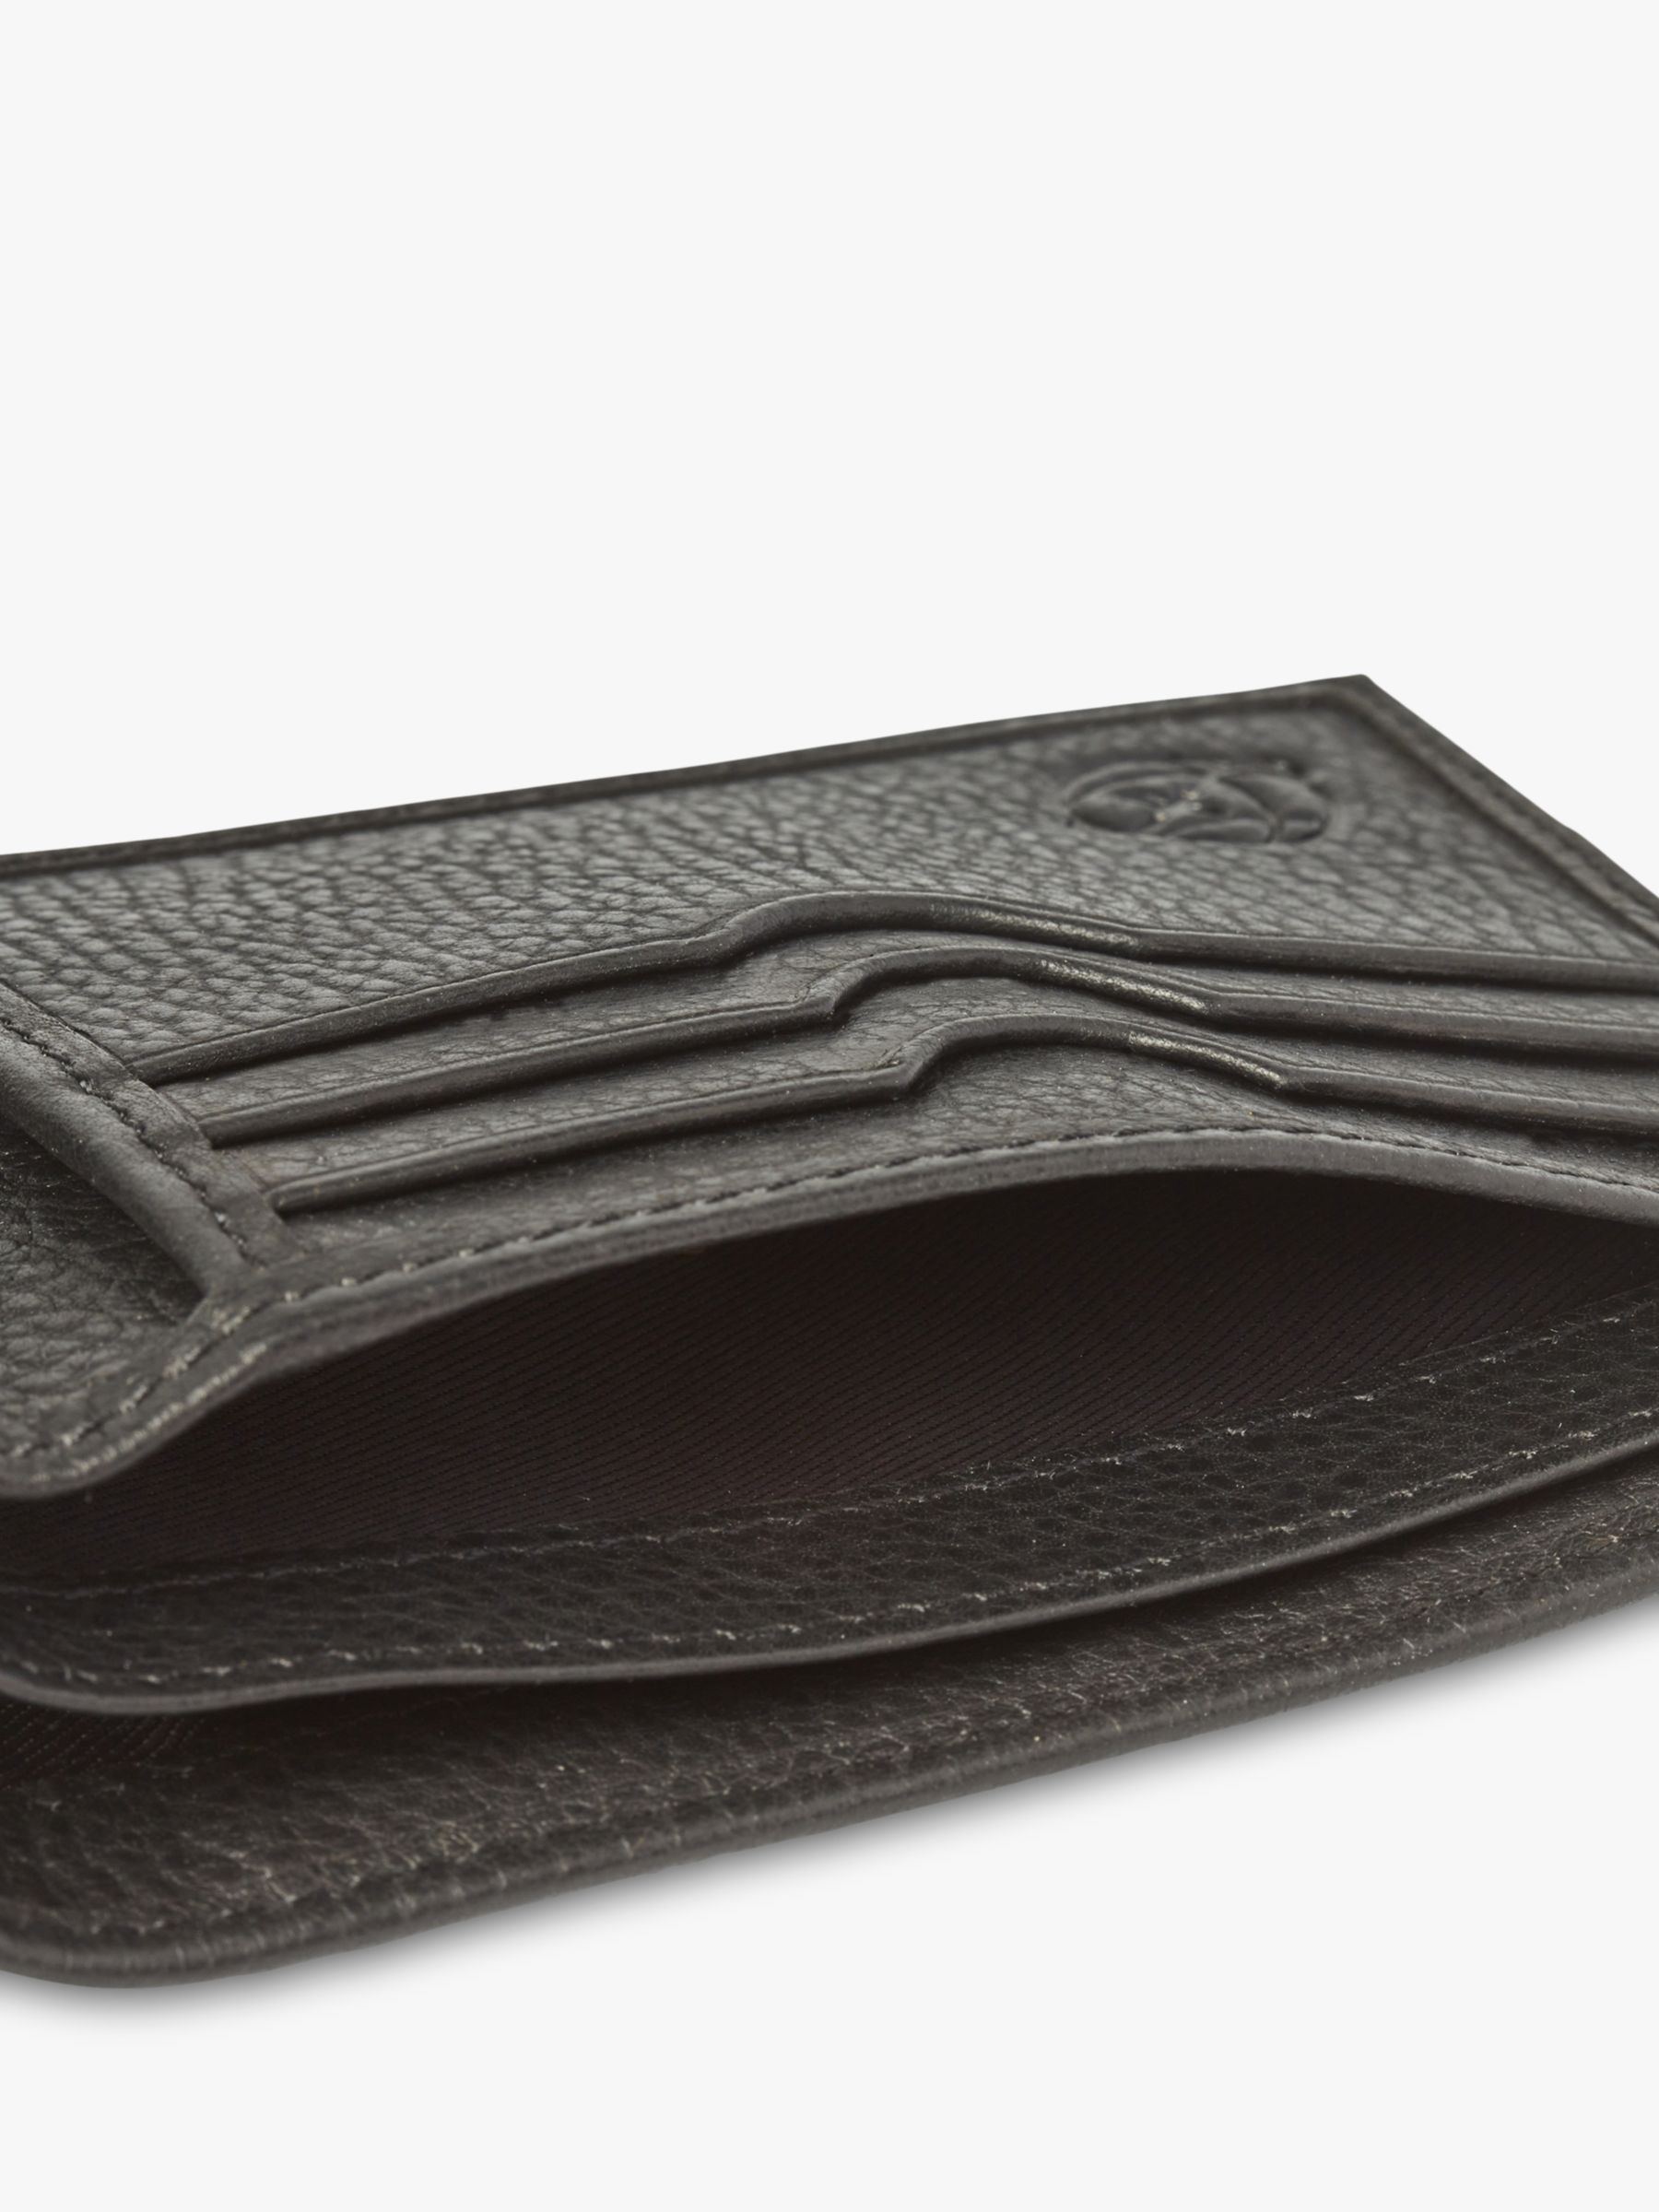 Buy Simon Carter West End Leather Wallet, Black Online at johnlewis.com